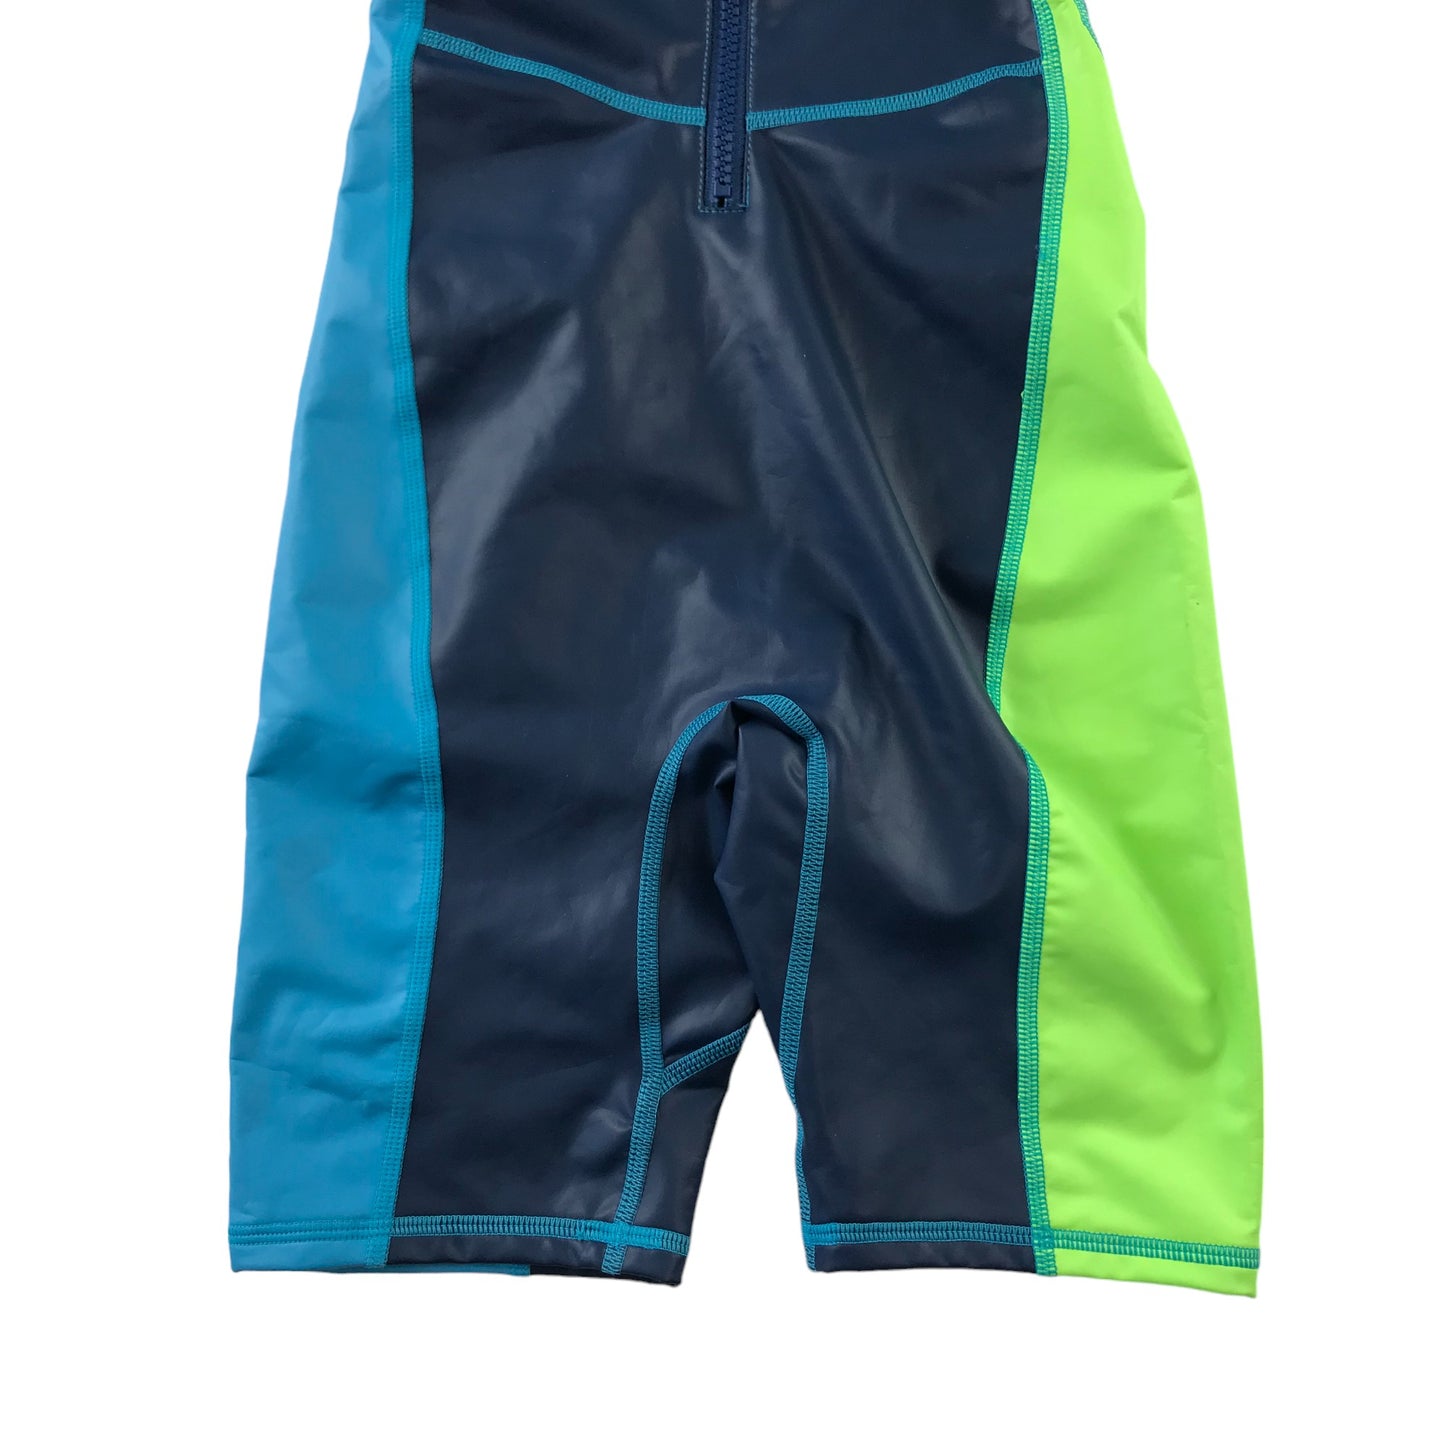 Decathlon Swim Onesie Age 8-9 Navy and Neon Short Legs